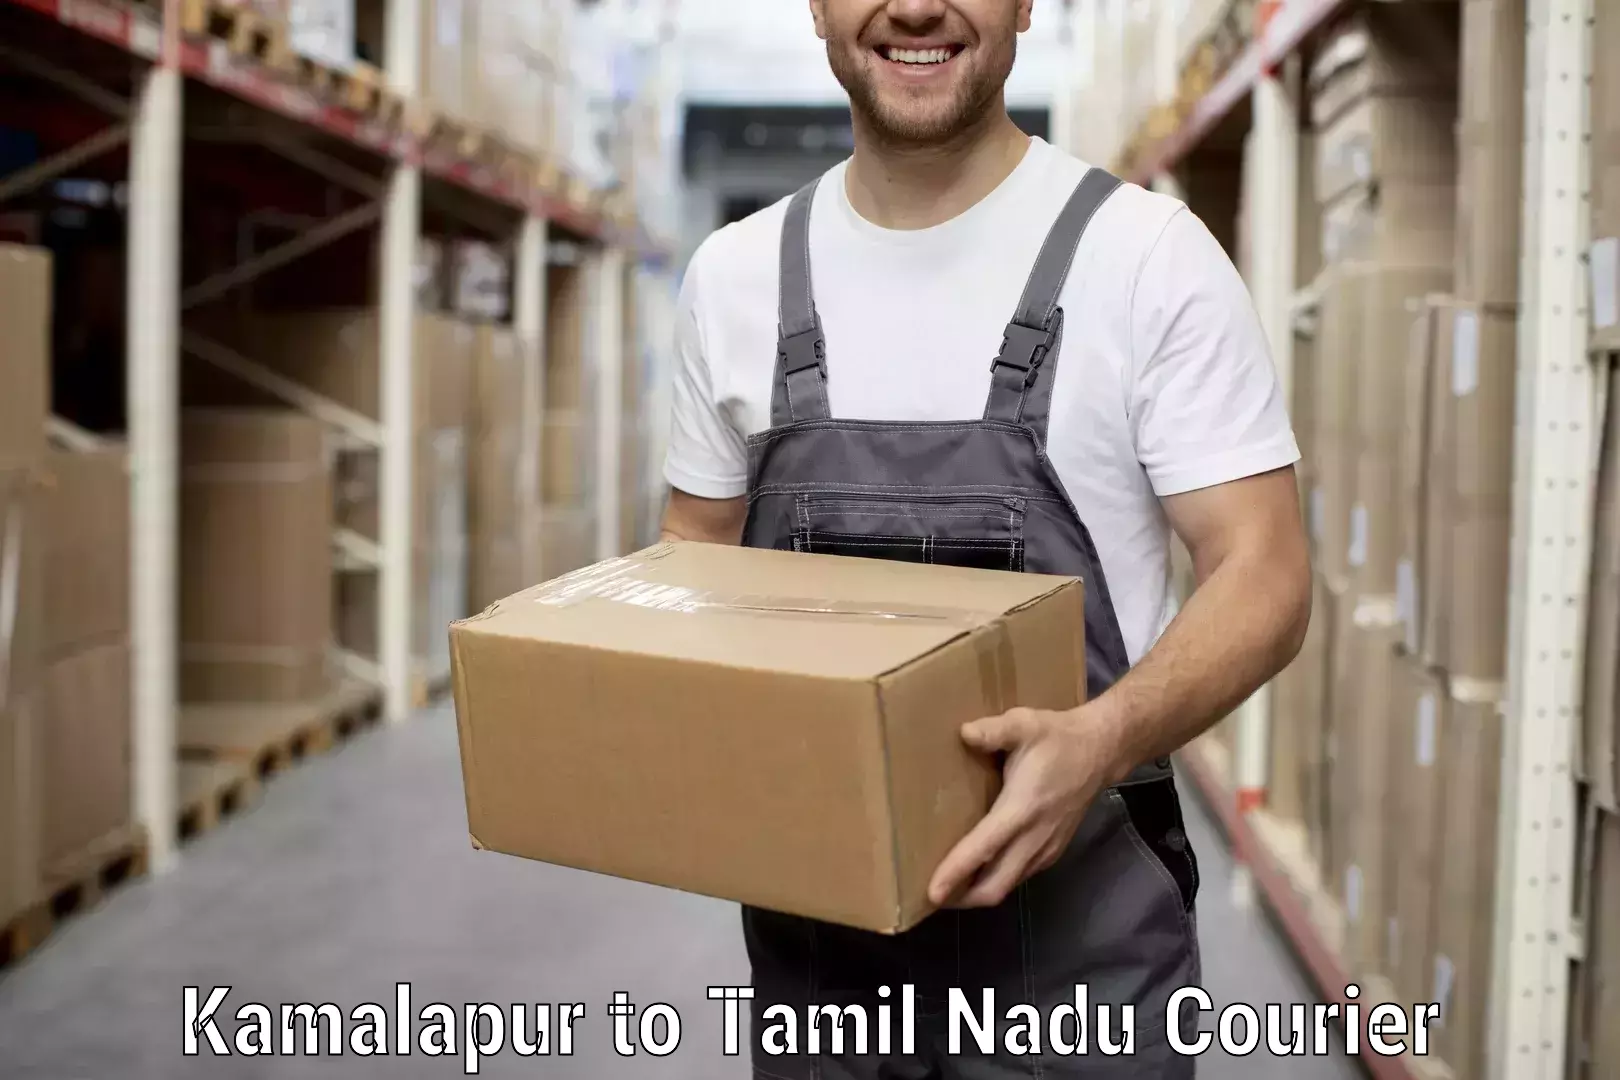 Professional moving company Kamalapur to Peralam